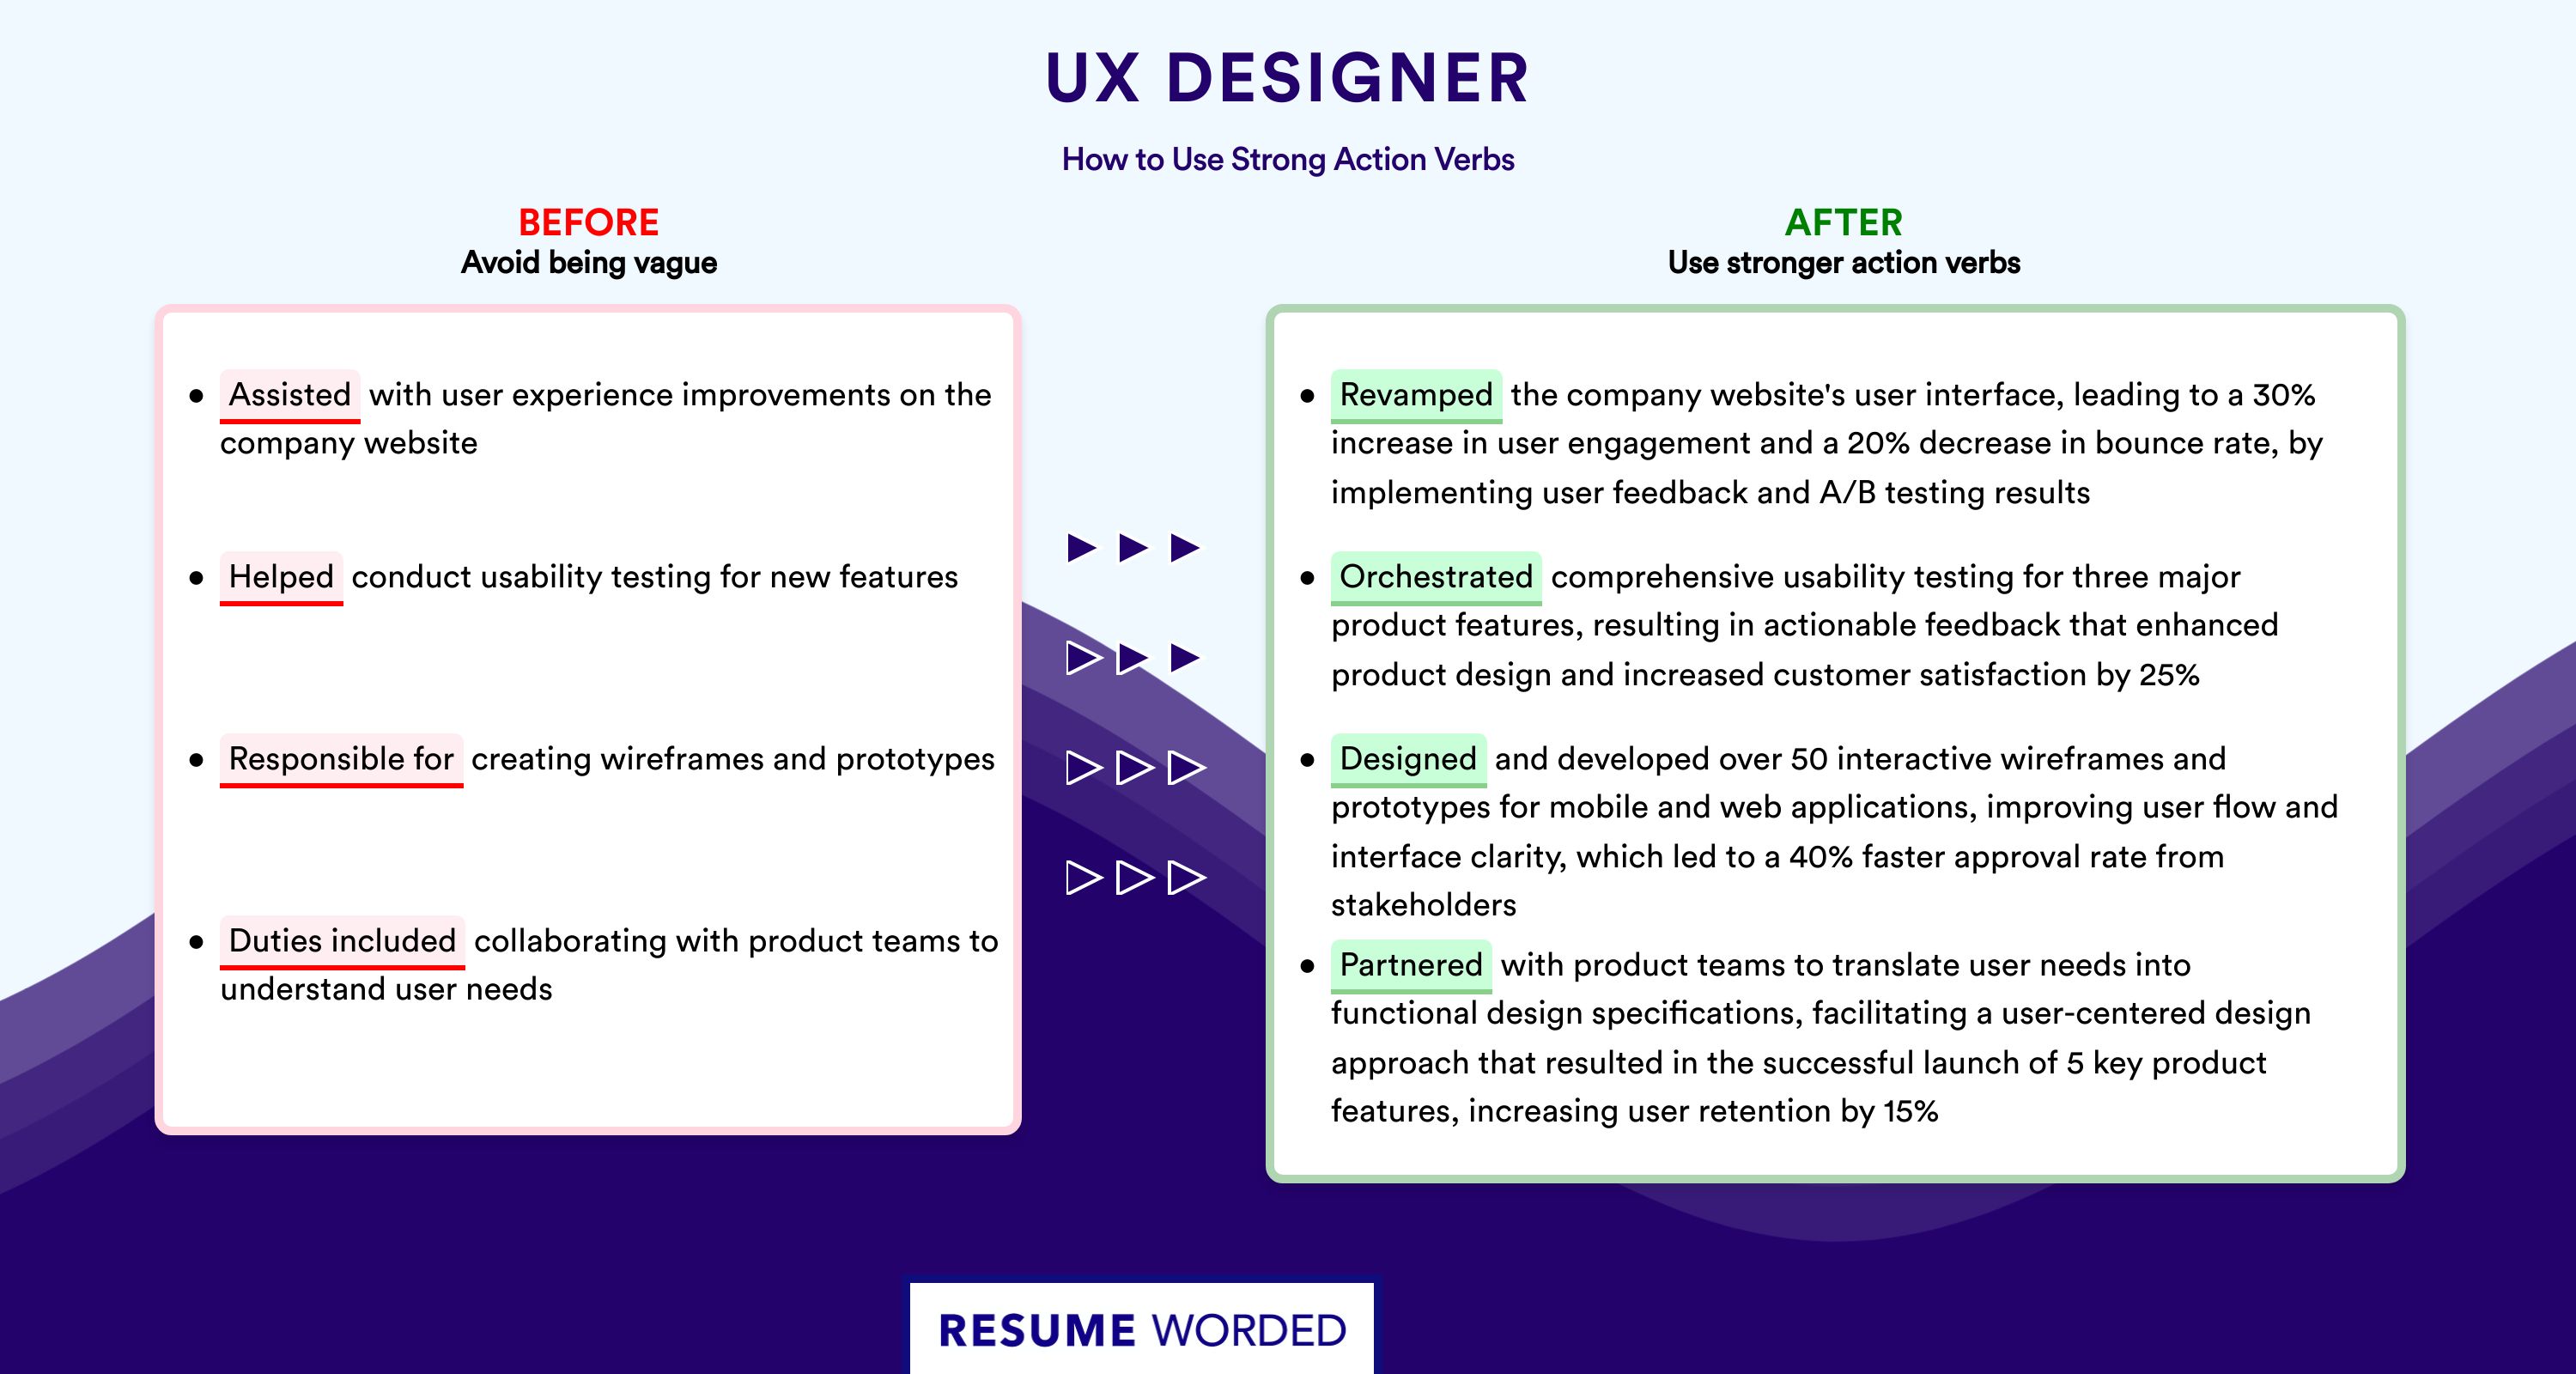 Action Verbs for UX Designer